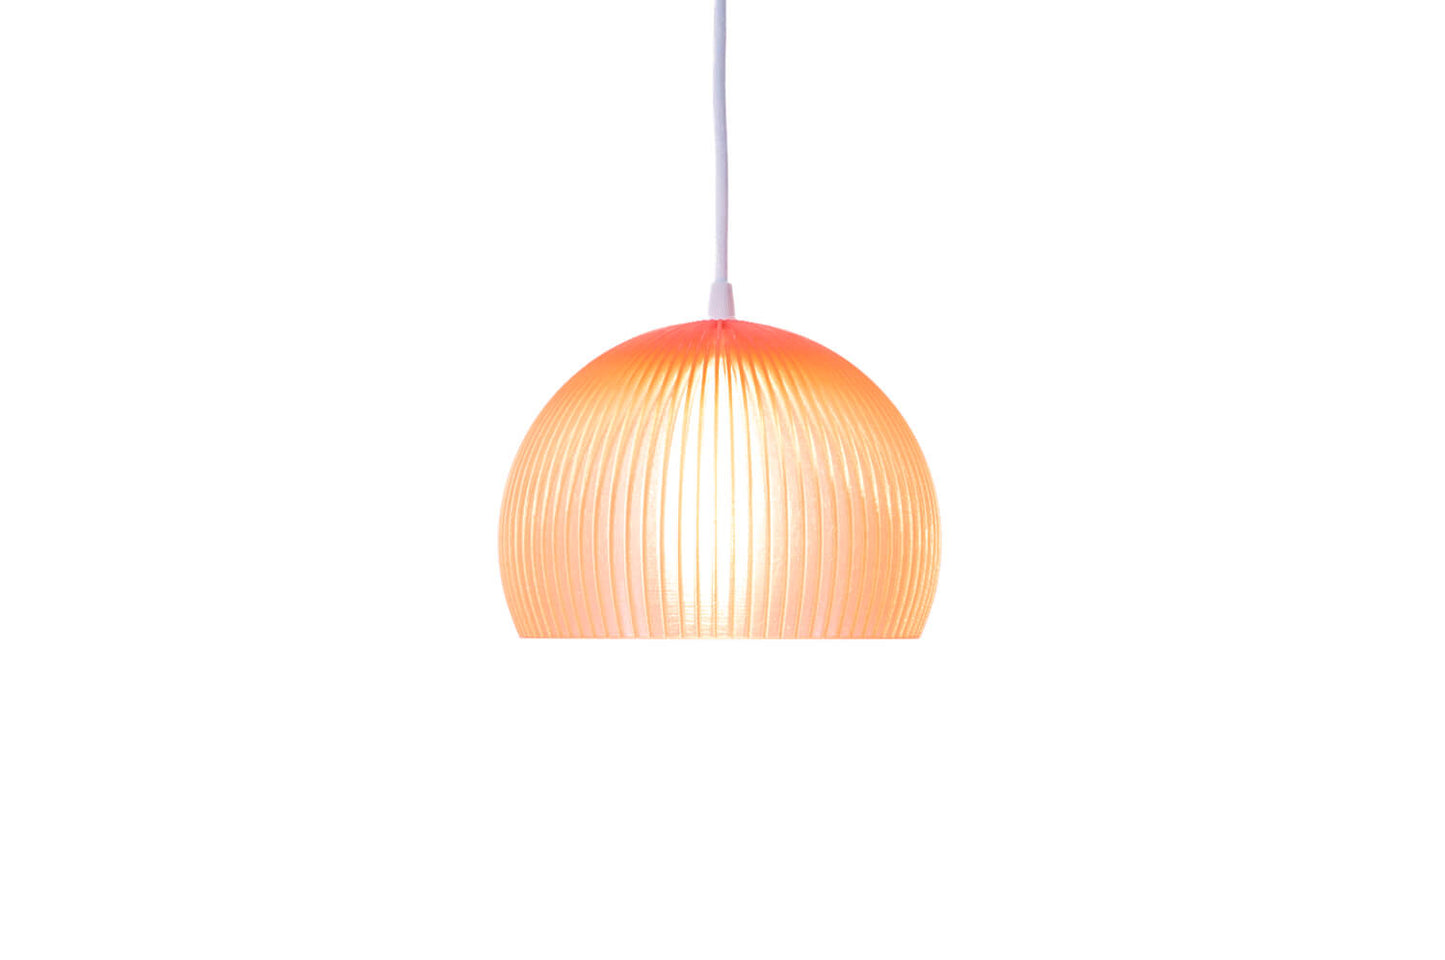 Pendant lamp Krk Peach Orange-Pink Ø 21 cm